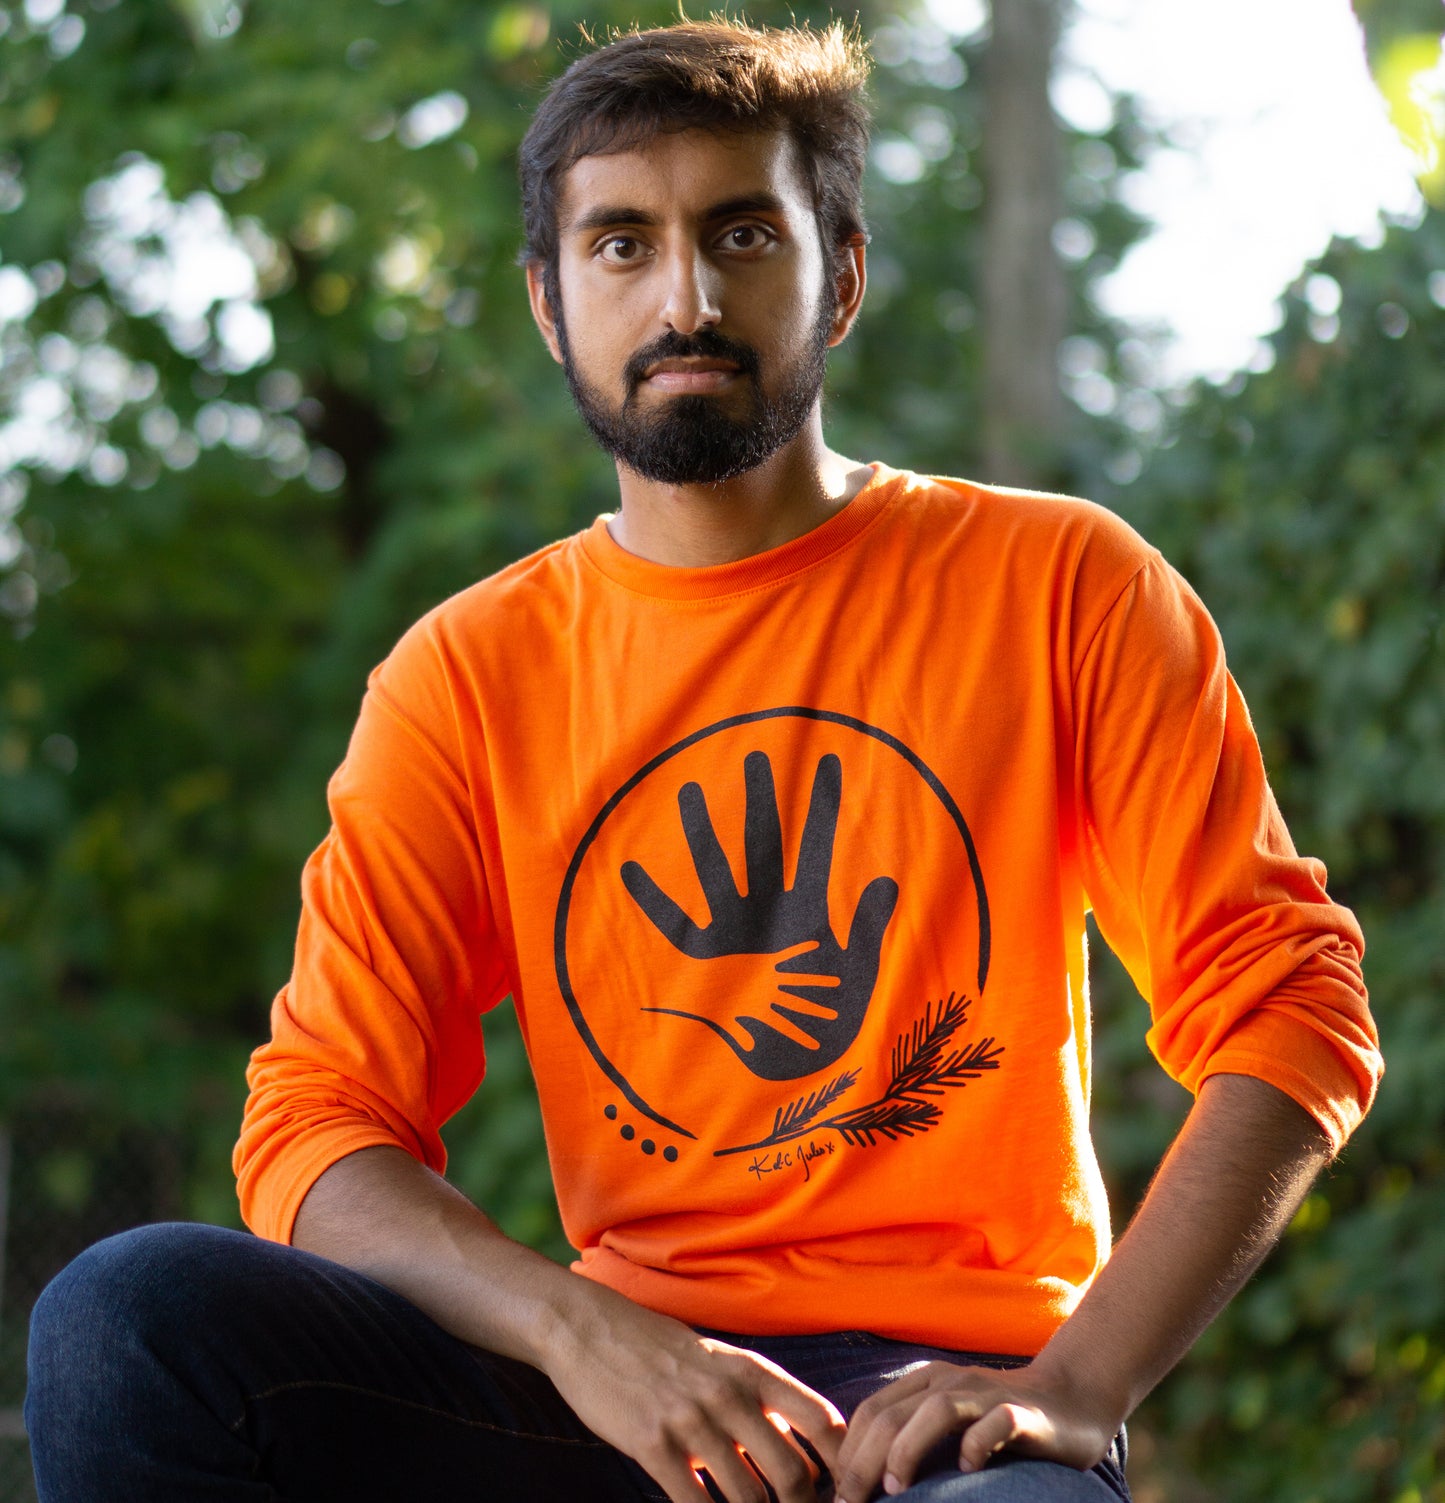 Orange Shirt - Hand in Hand